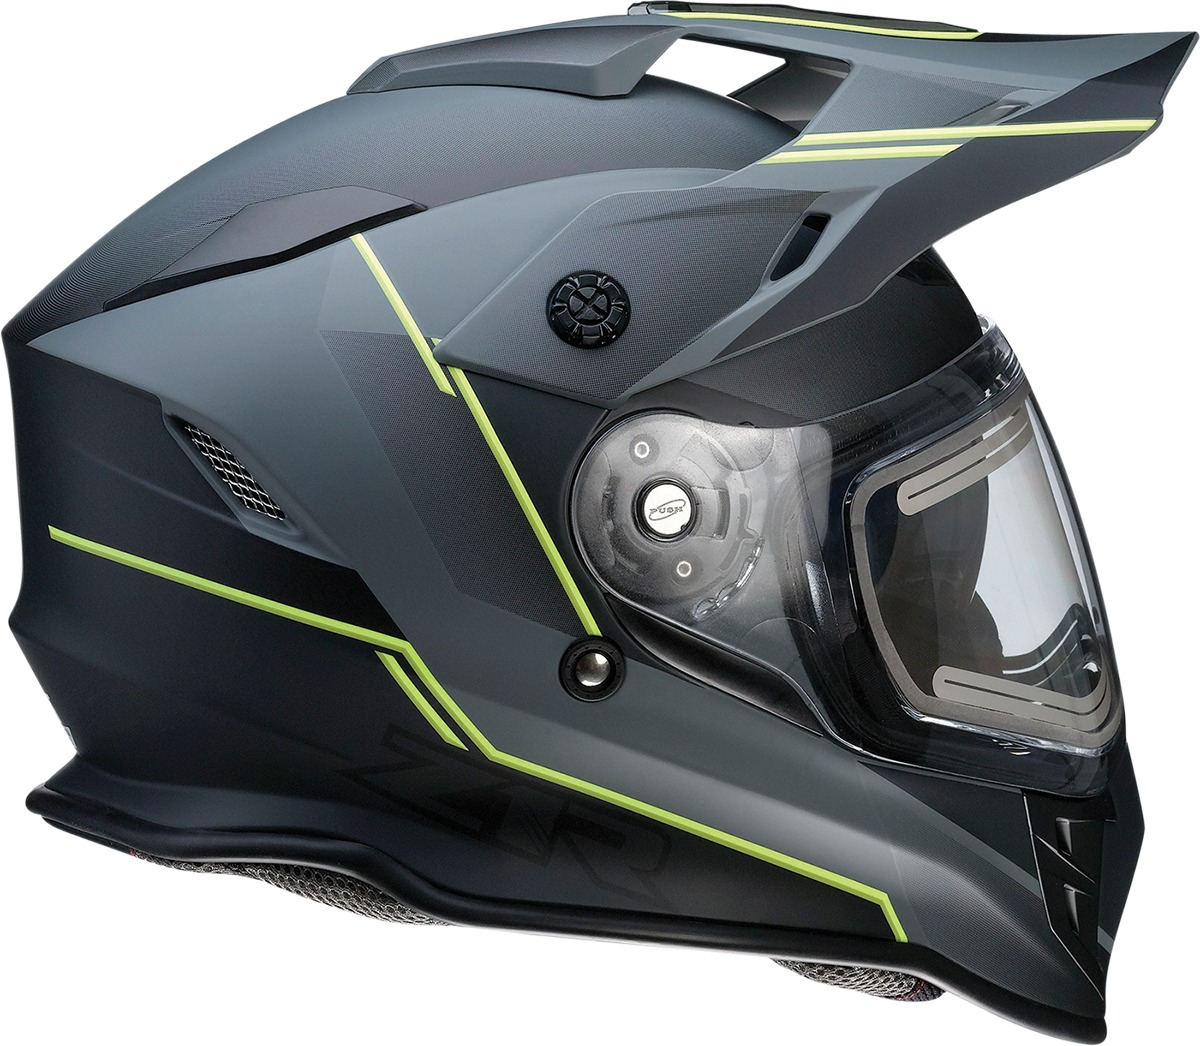 Range Bladestorm Dual-Sport Snow Helmet X-Small - Gray/Black/Yellow - Click Image to Close